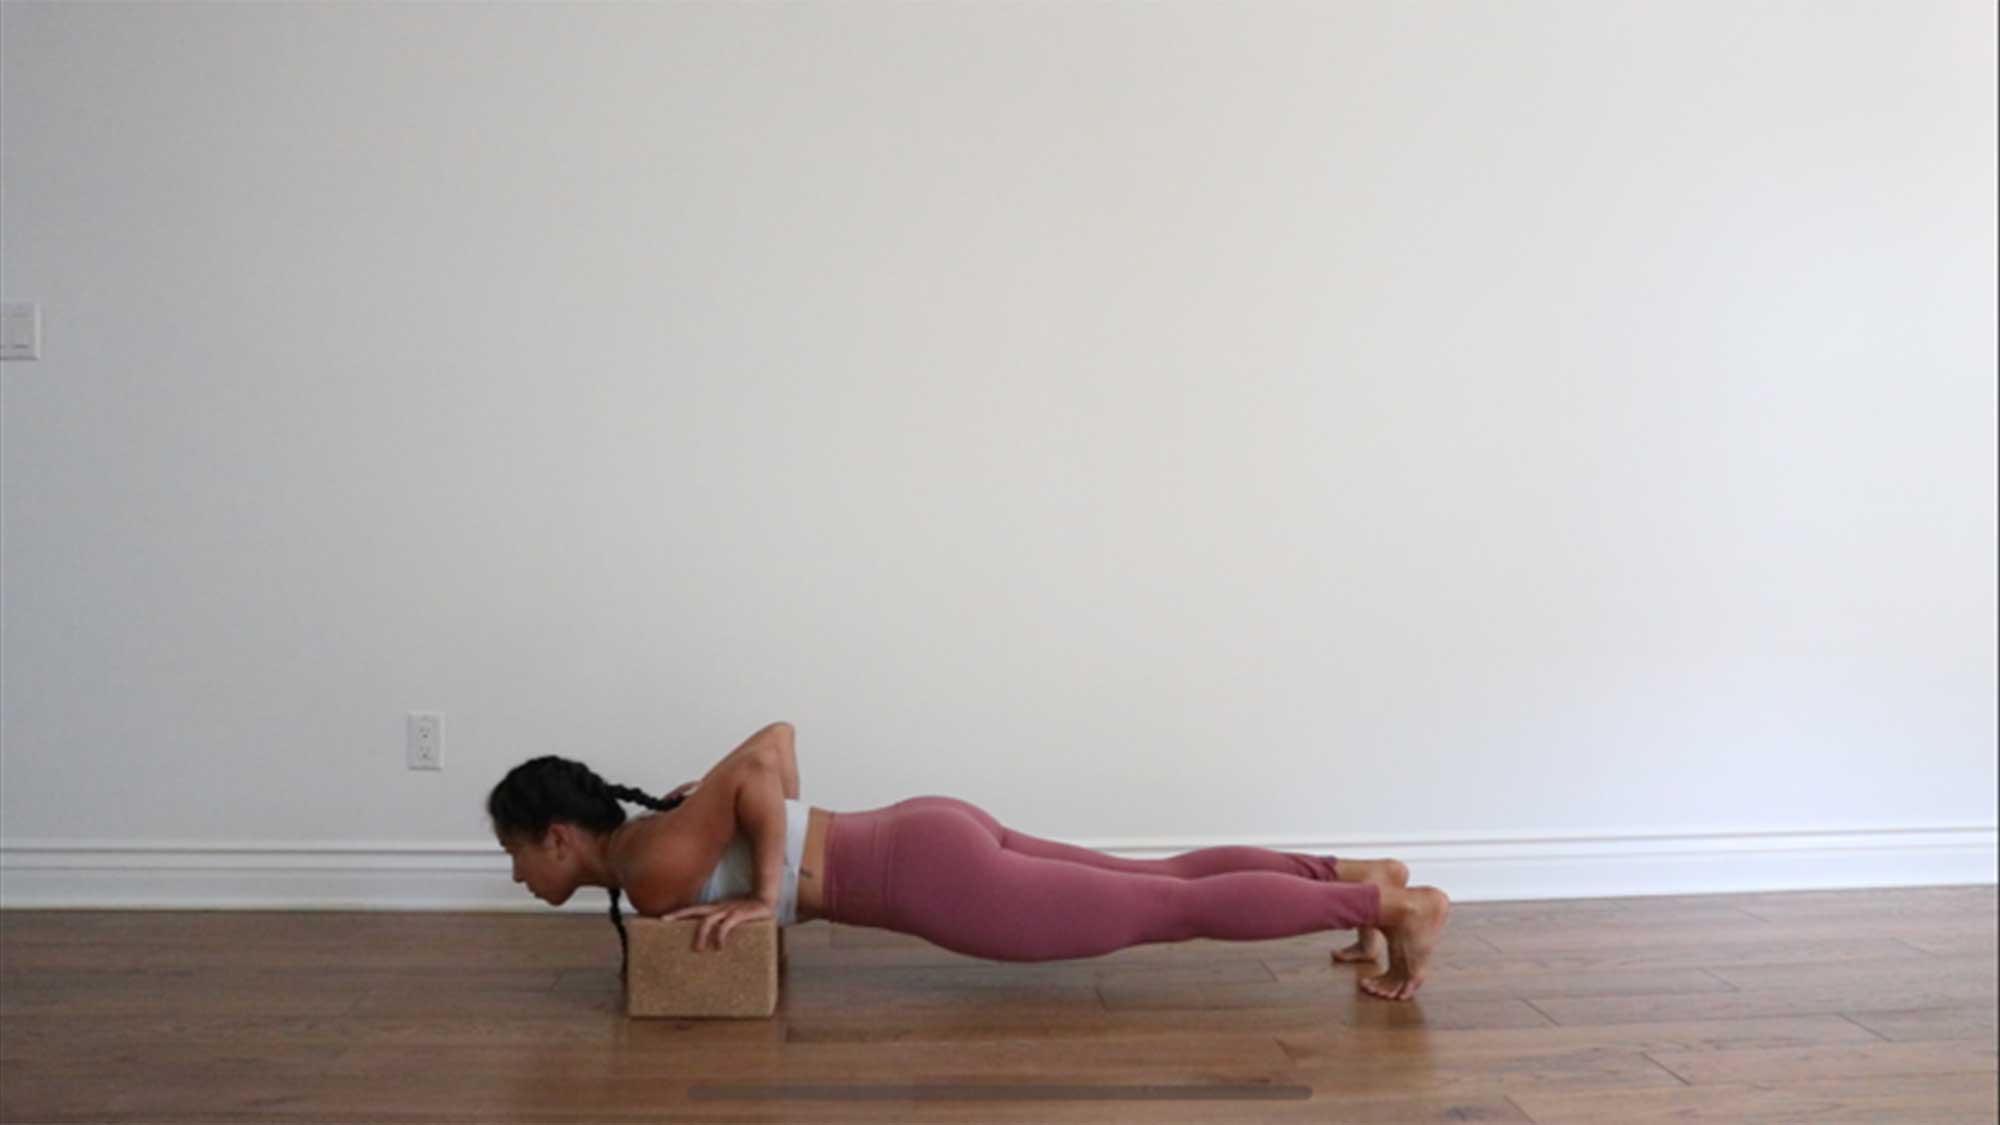 Stretch for your Heart! Yoga Poses for Heart Health | Healthmug